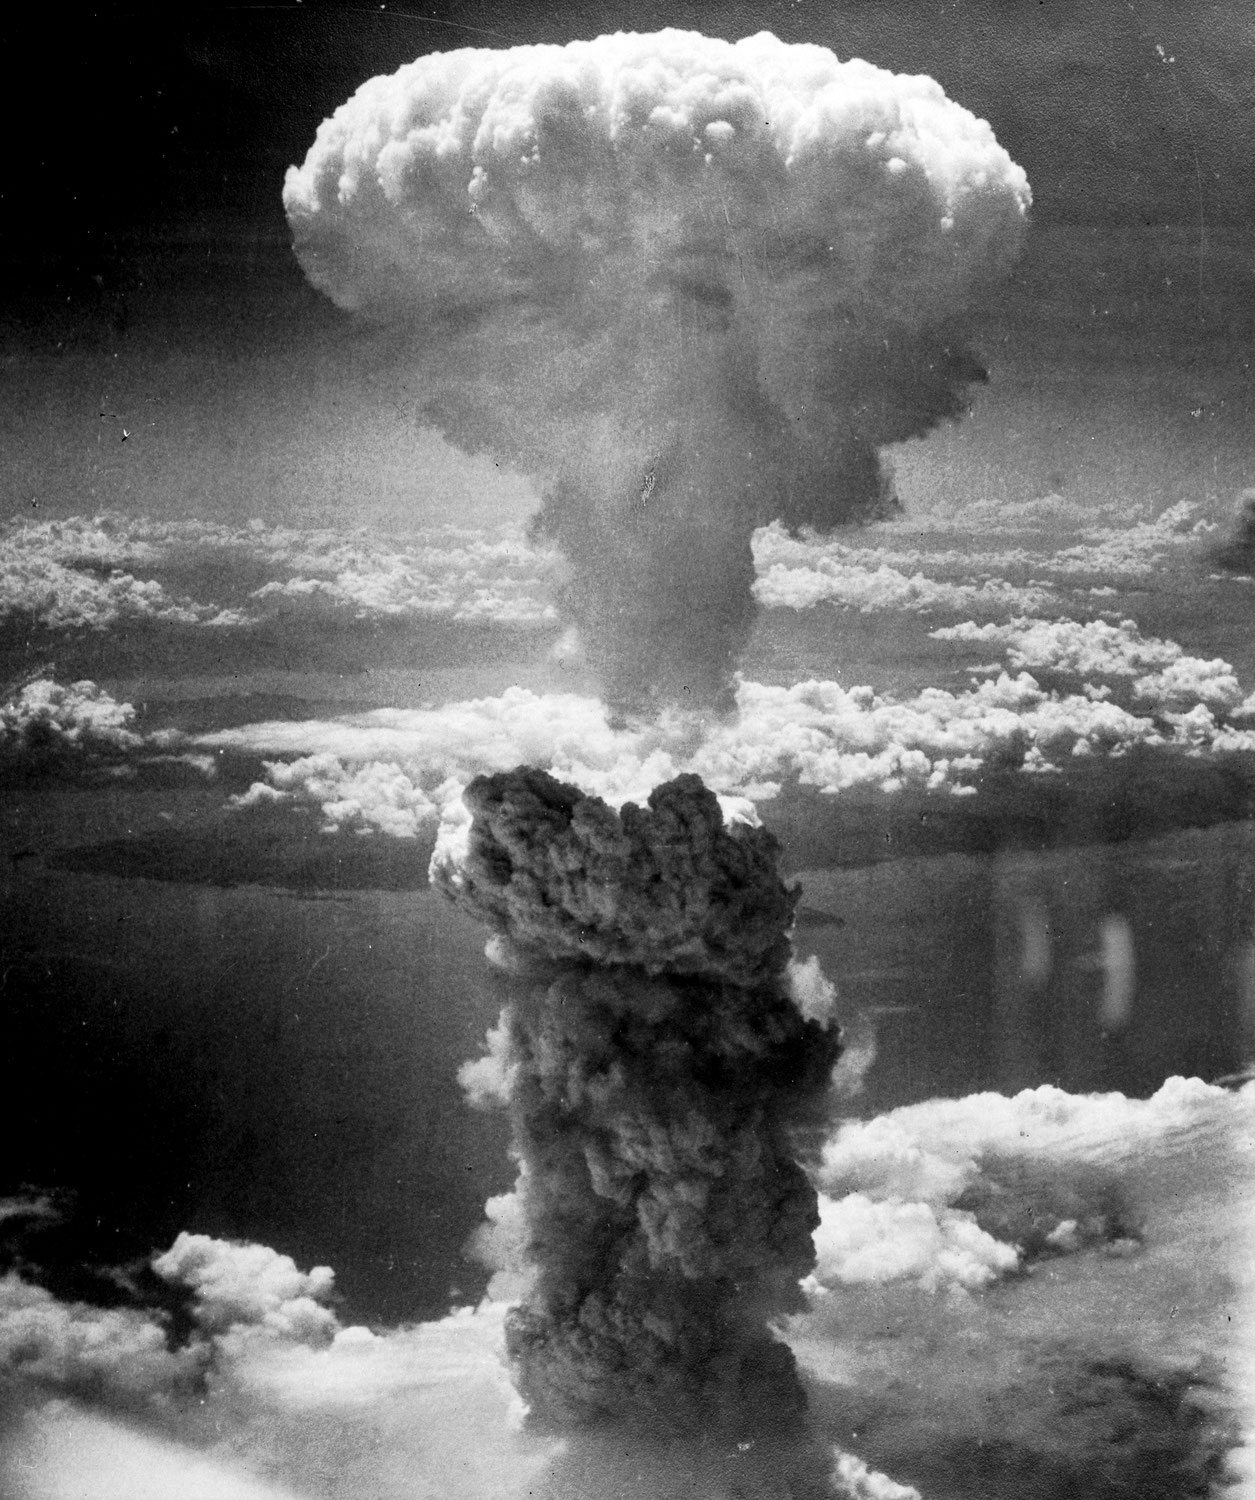 6. Agt. 1945: US-Atombombenabwürfe auf Hiroshima und Nagasaki